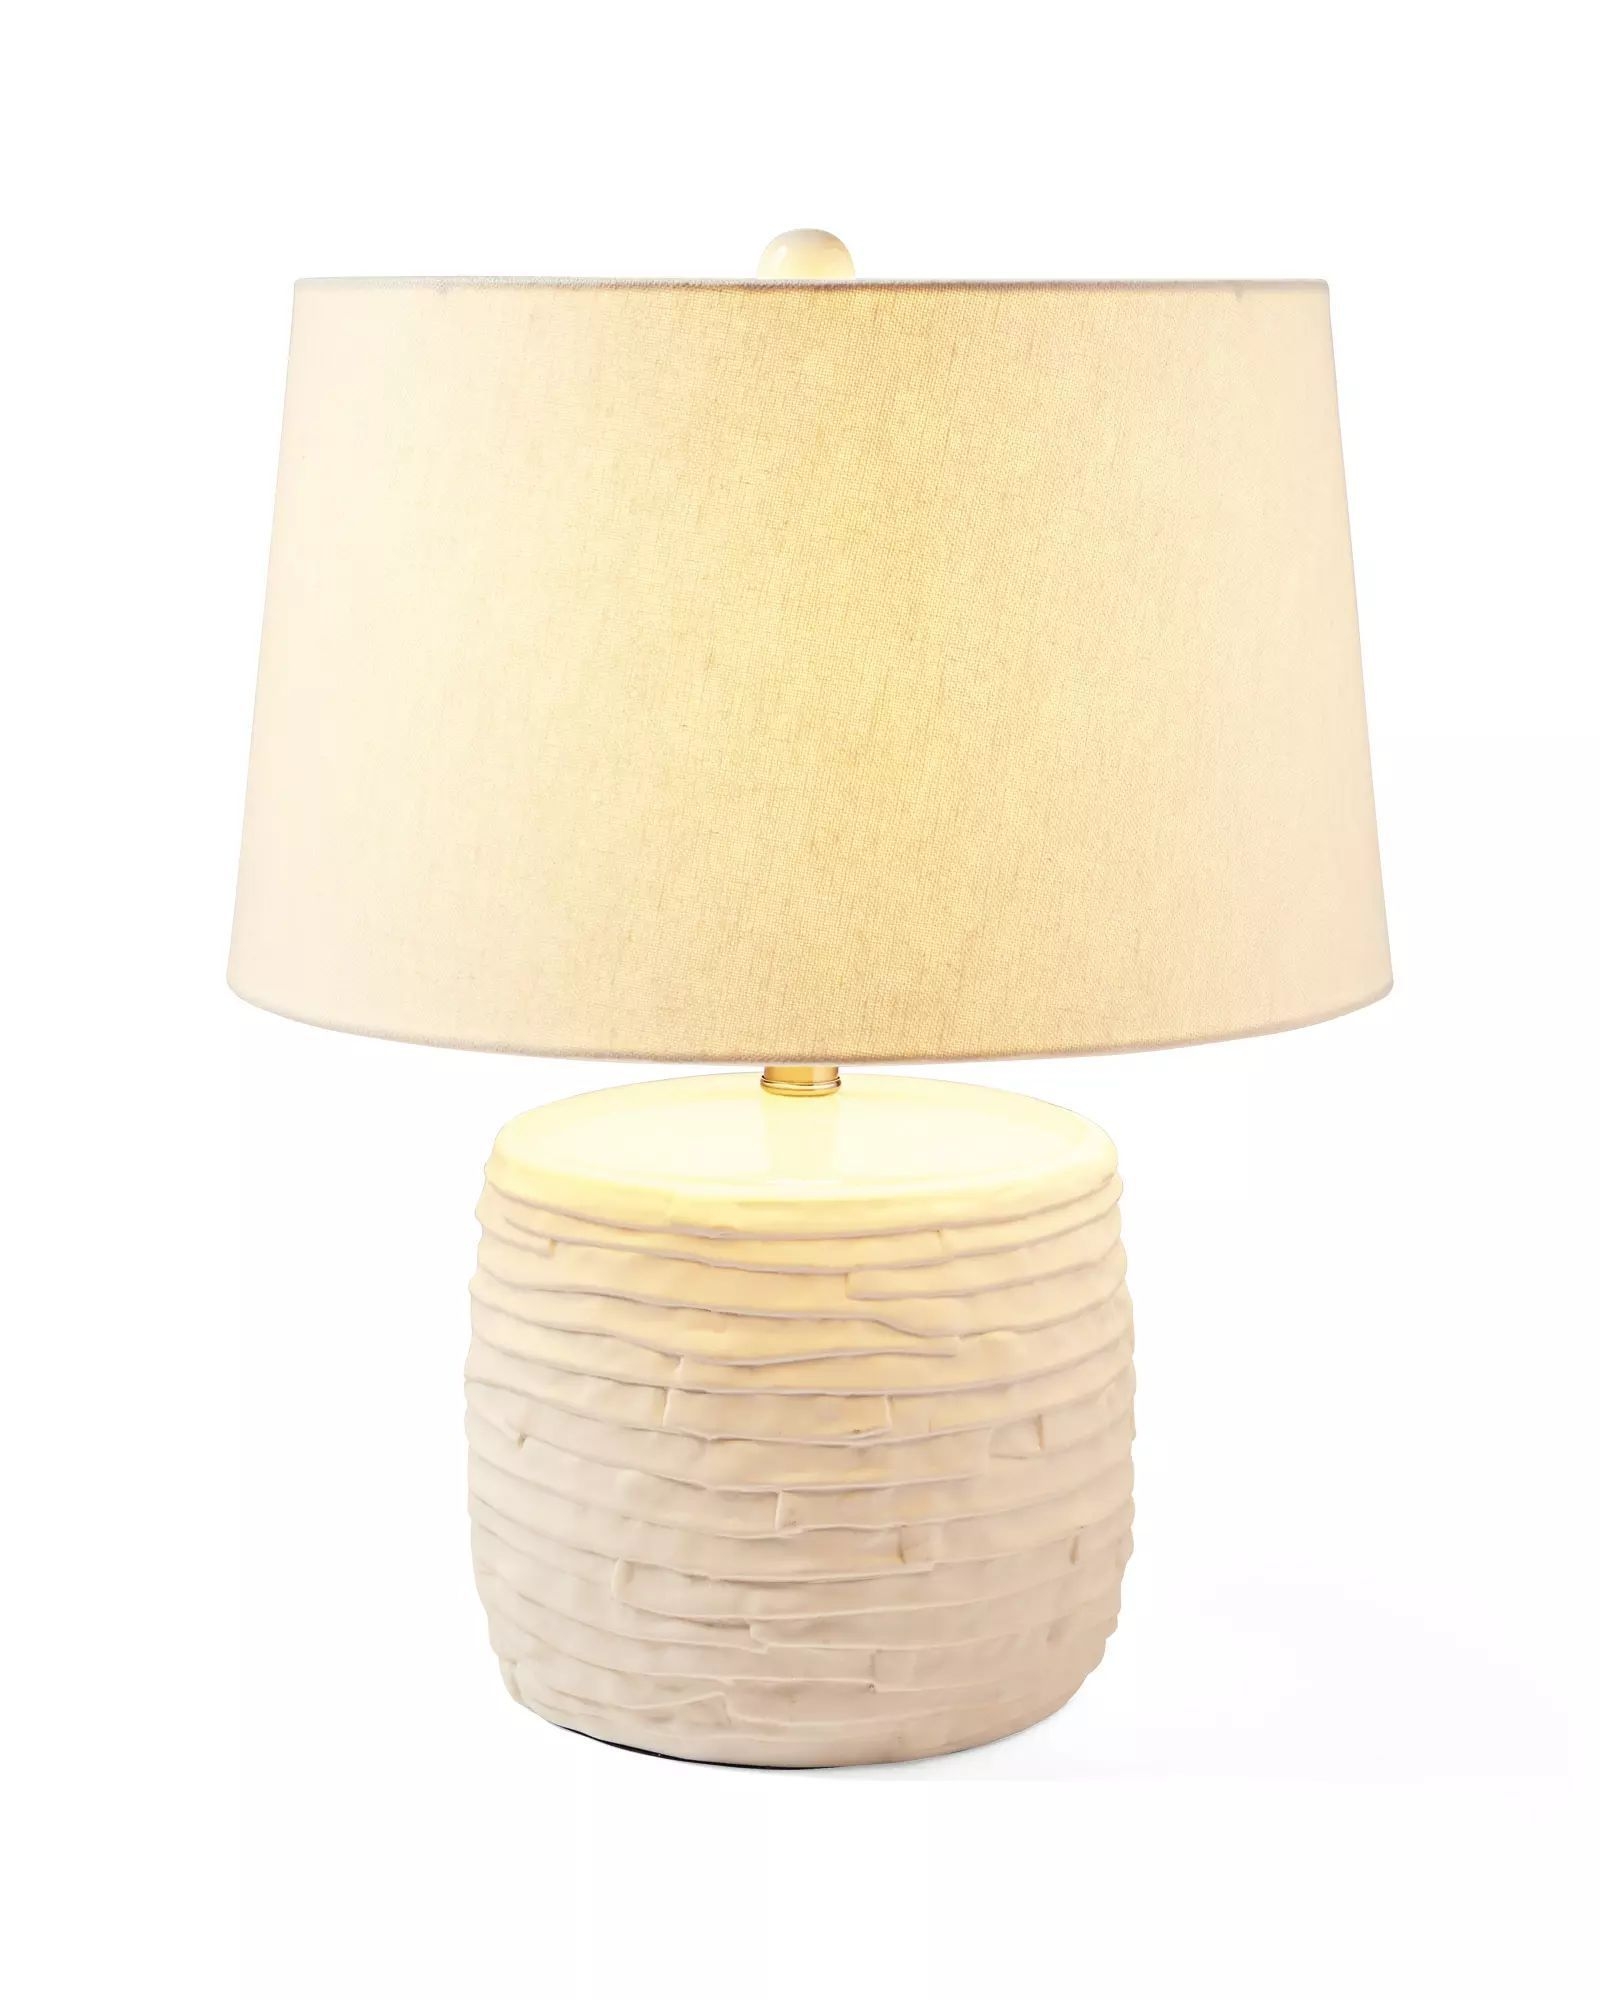 Madison Table Lamp - Image 1